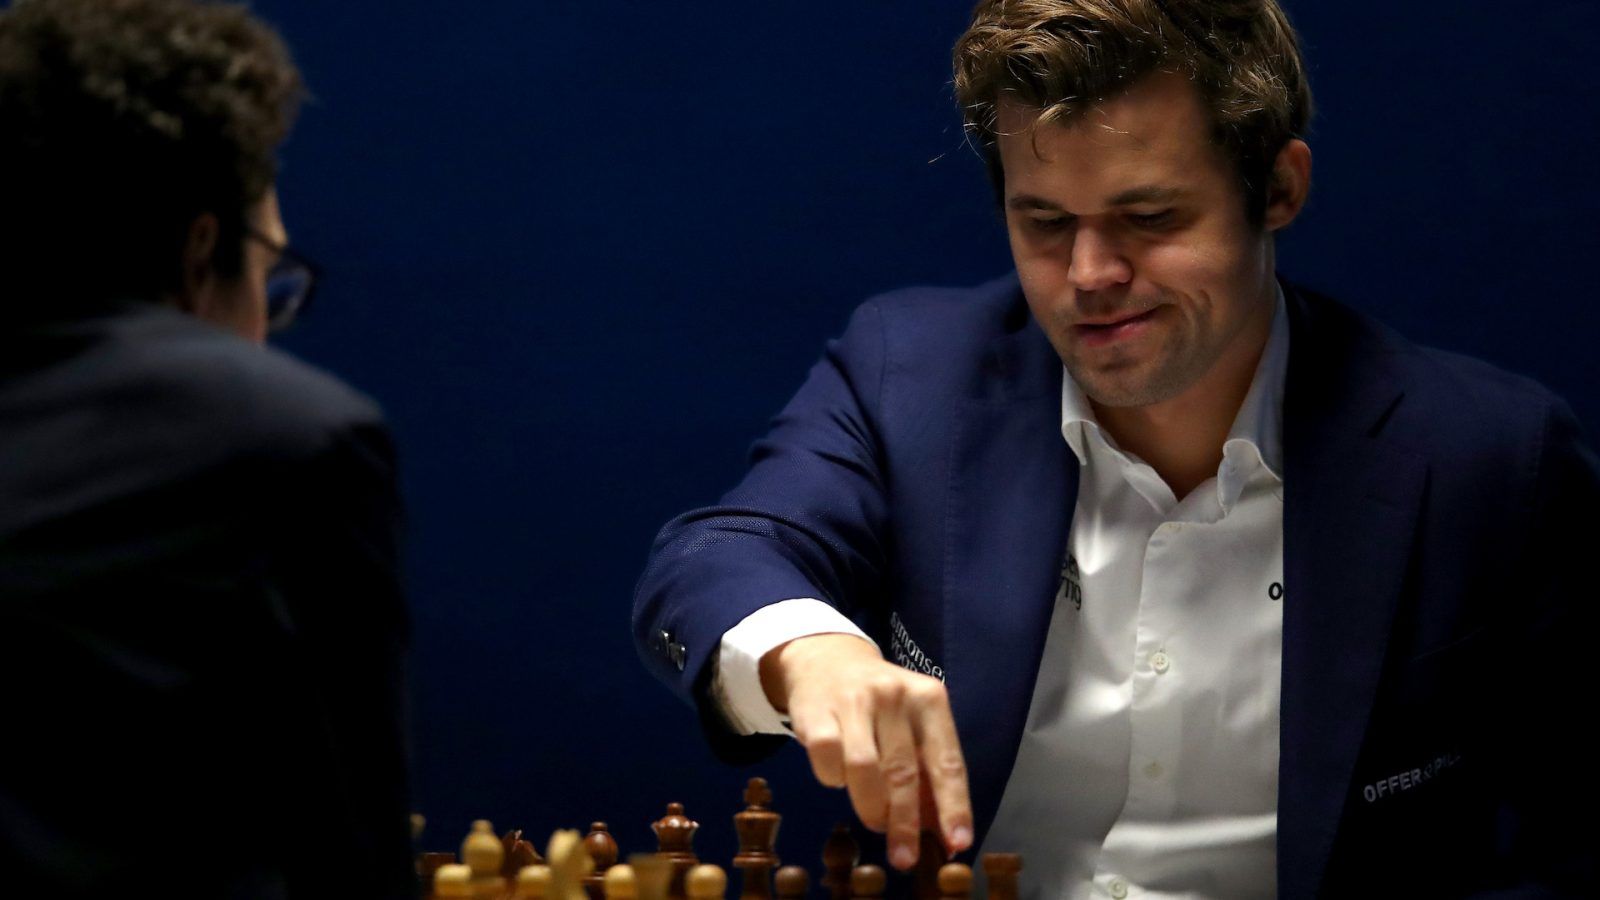 Jan-Krzysztof Duda wins the European Blitz Championship